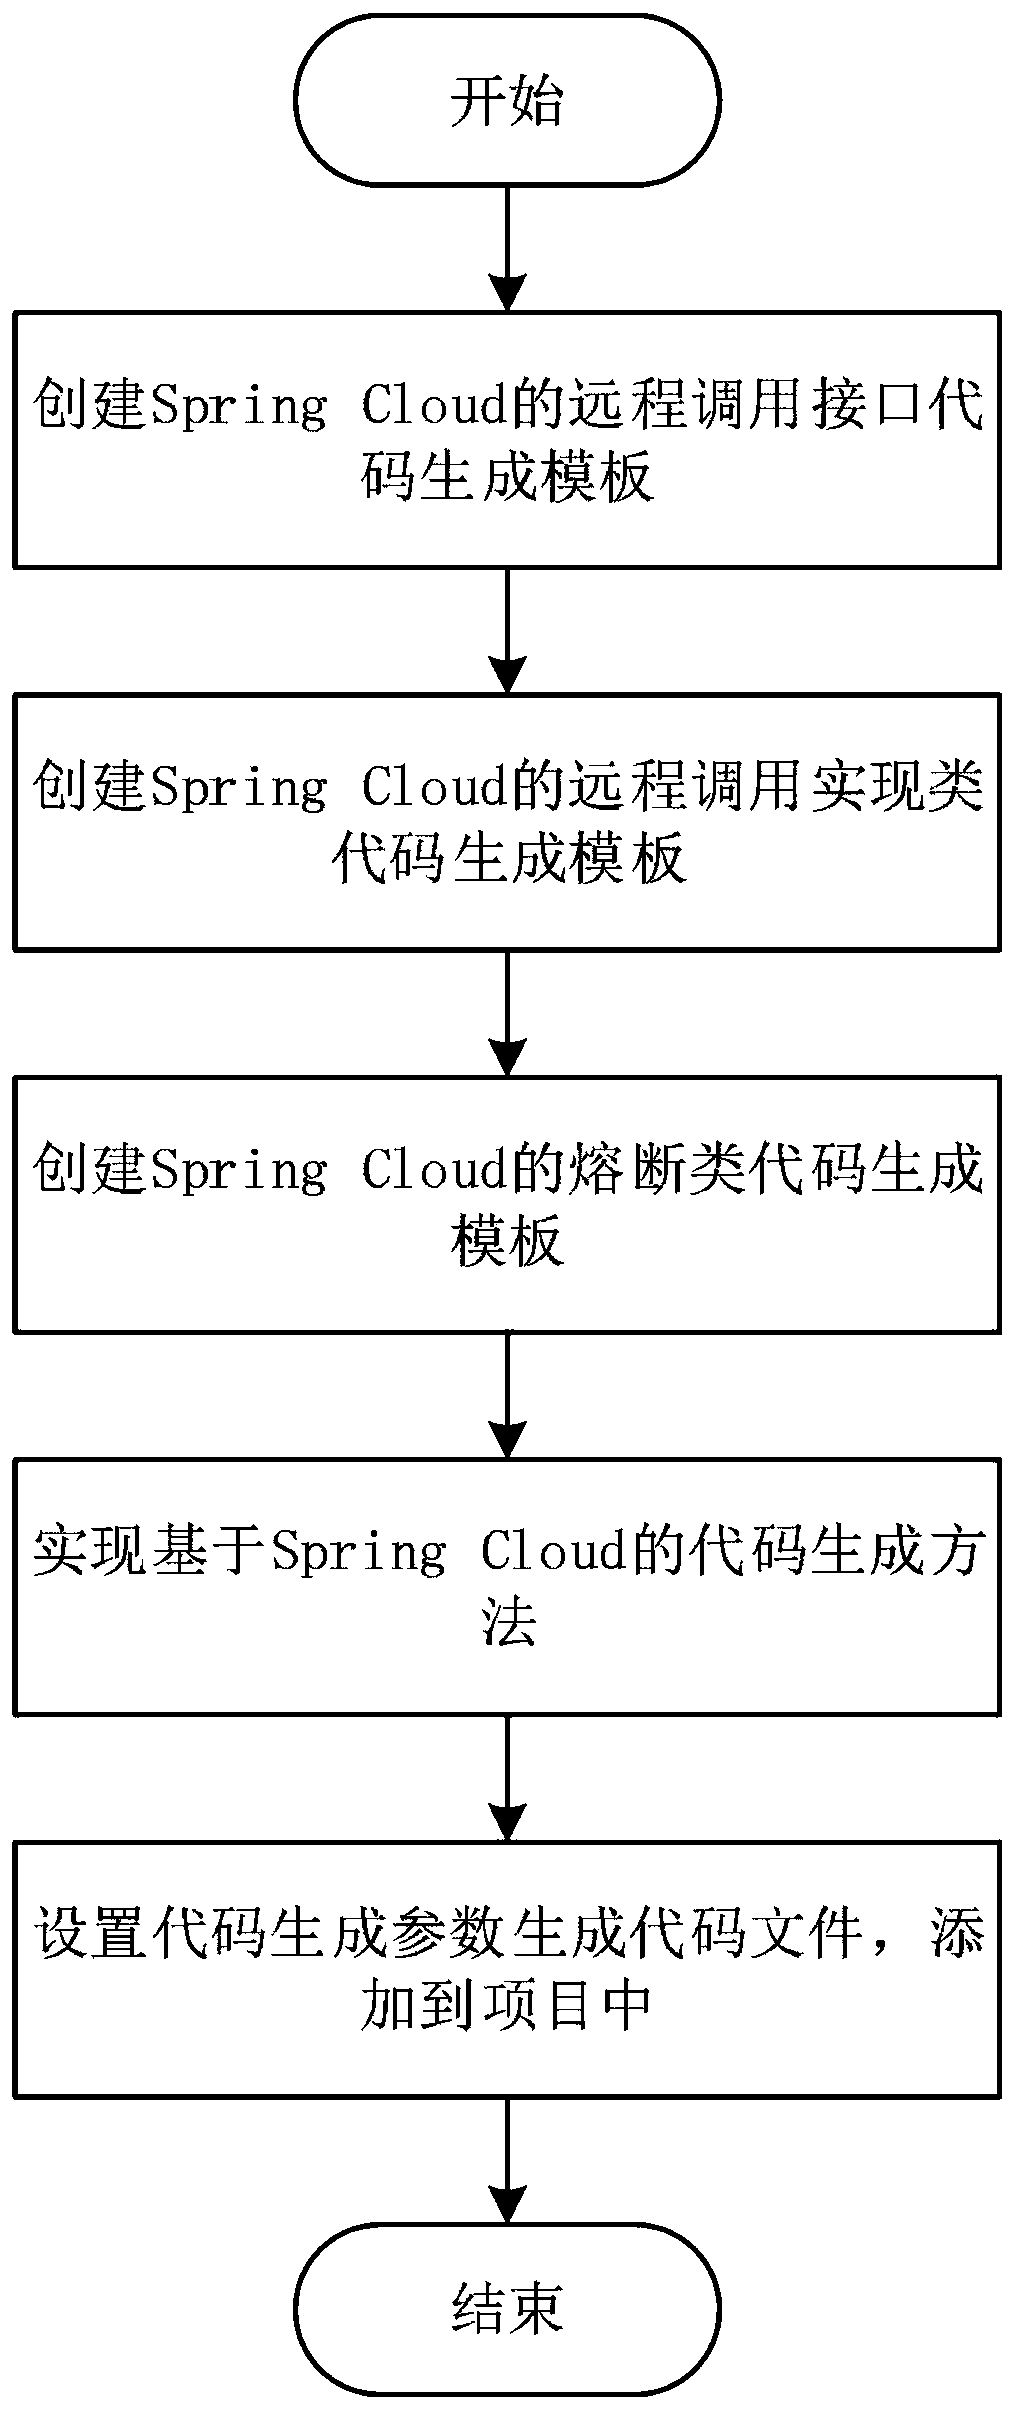 A Spring Cloud-based code generation method